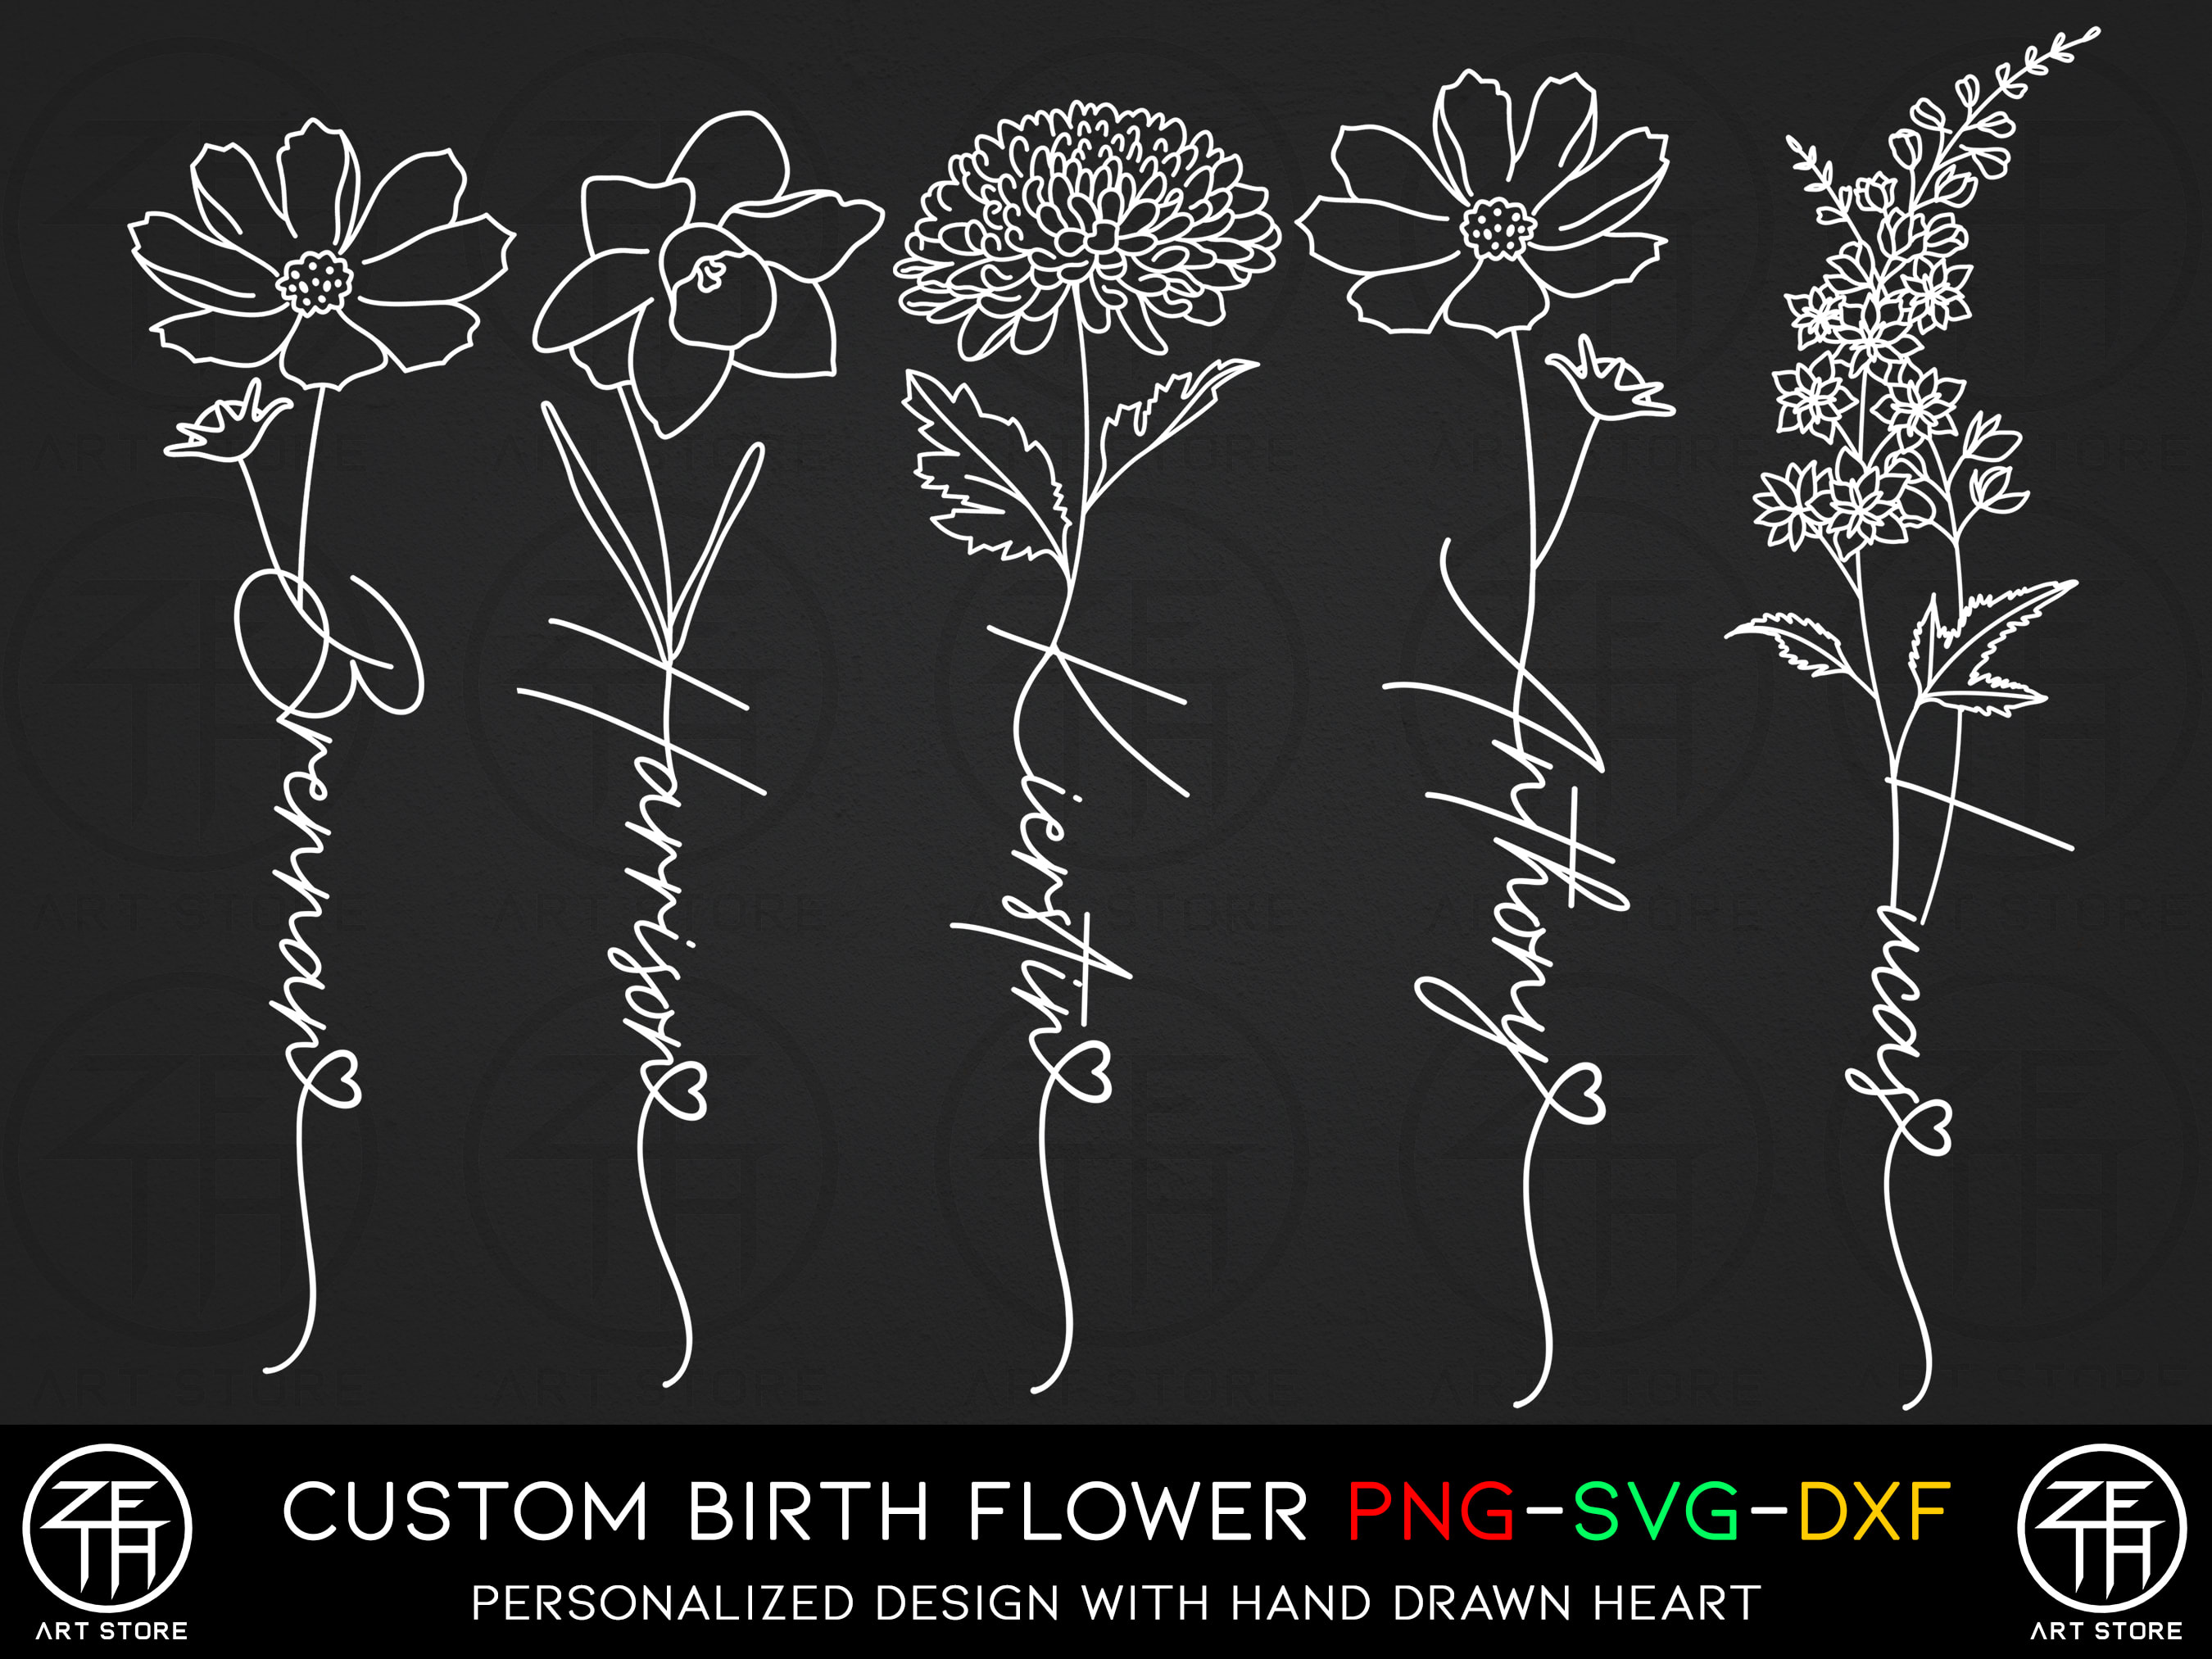 6. July Birth Flower Tattoo Sleeve - wide 3